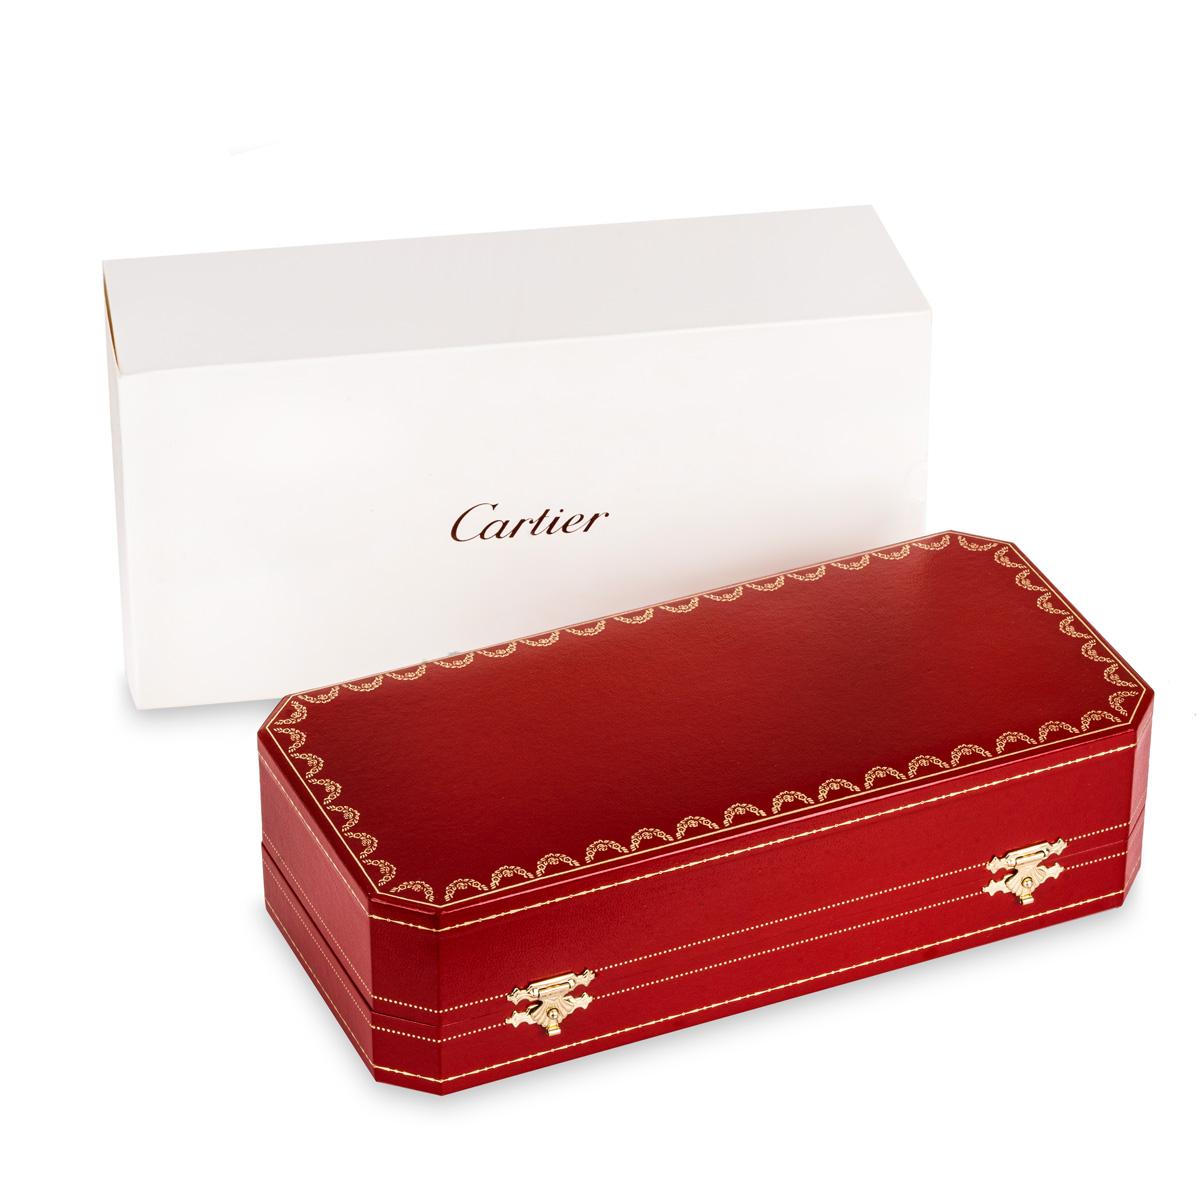 Women's or Men's Cartier Perpetual Calendar Limited Edition Watch Pen